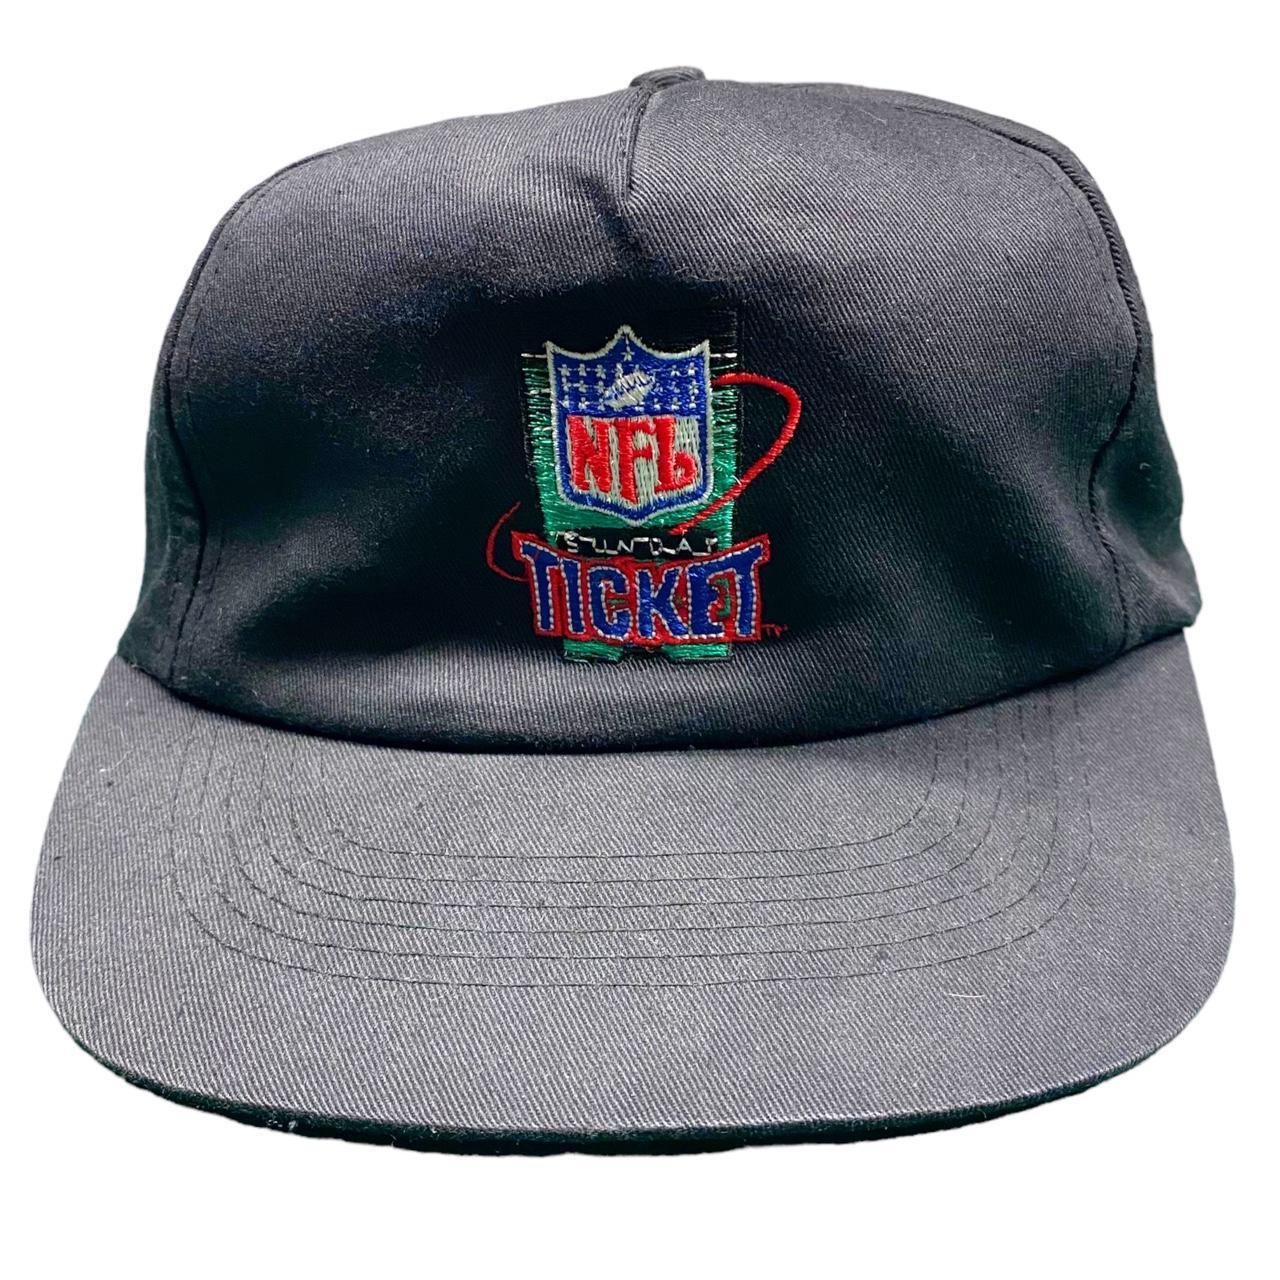 NFL Men's Caps - Black